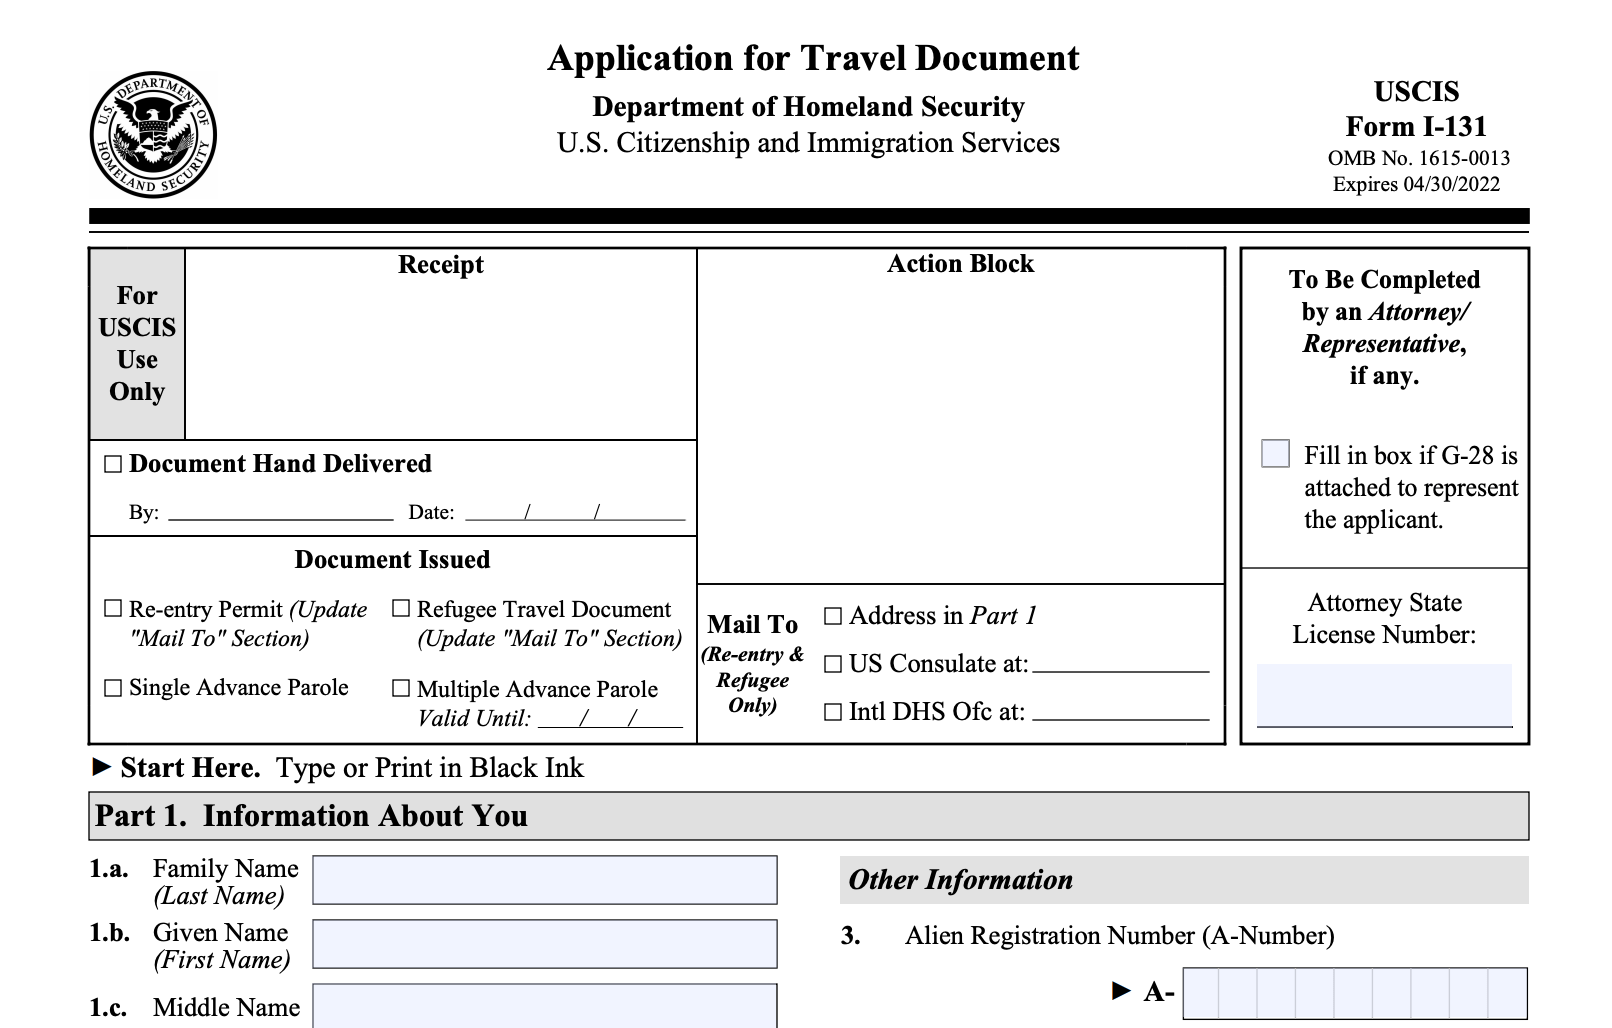 I-131, Application for Travel Document